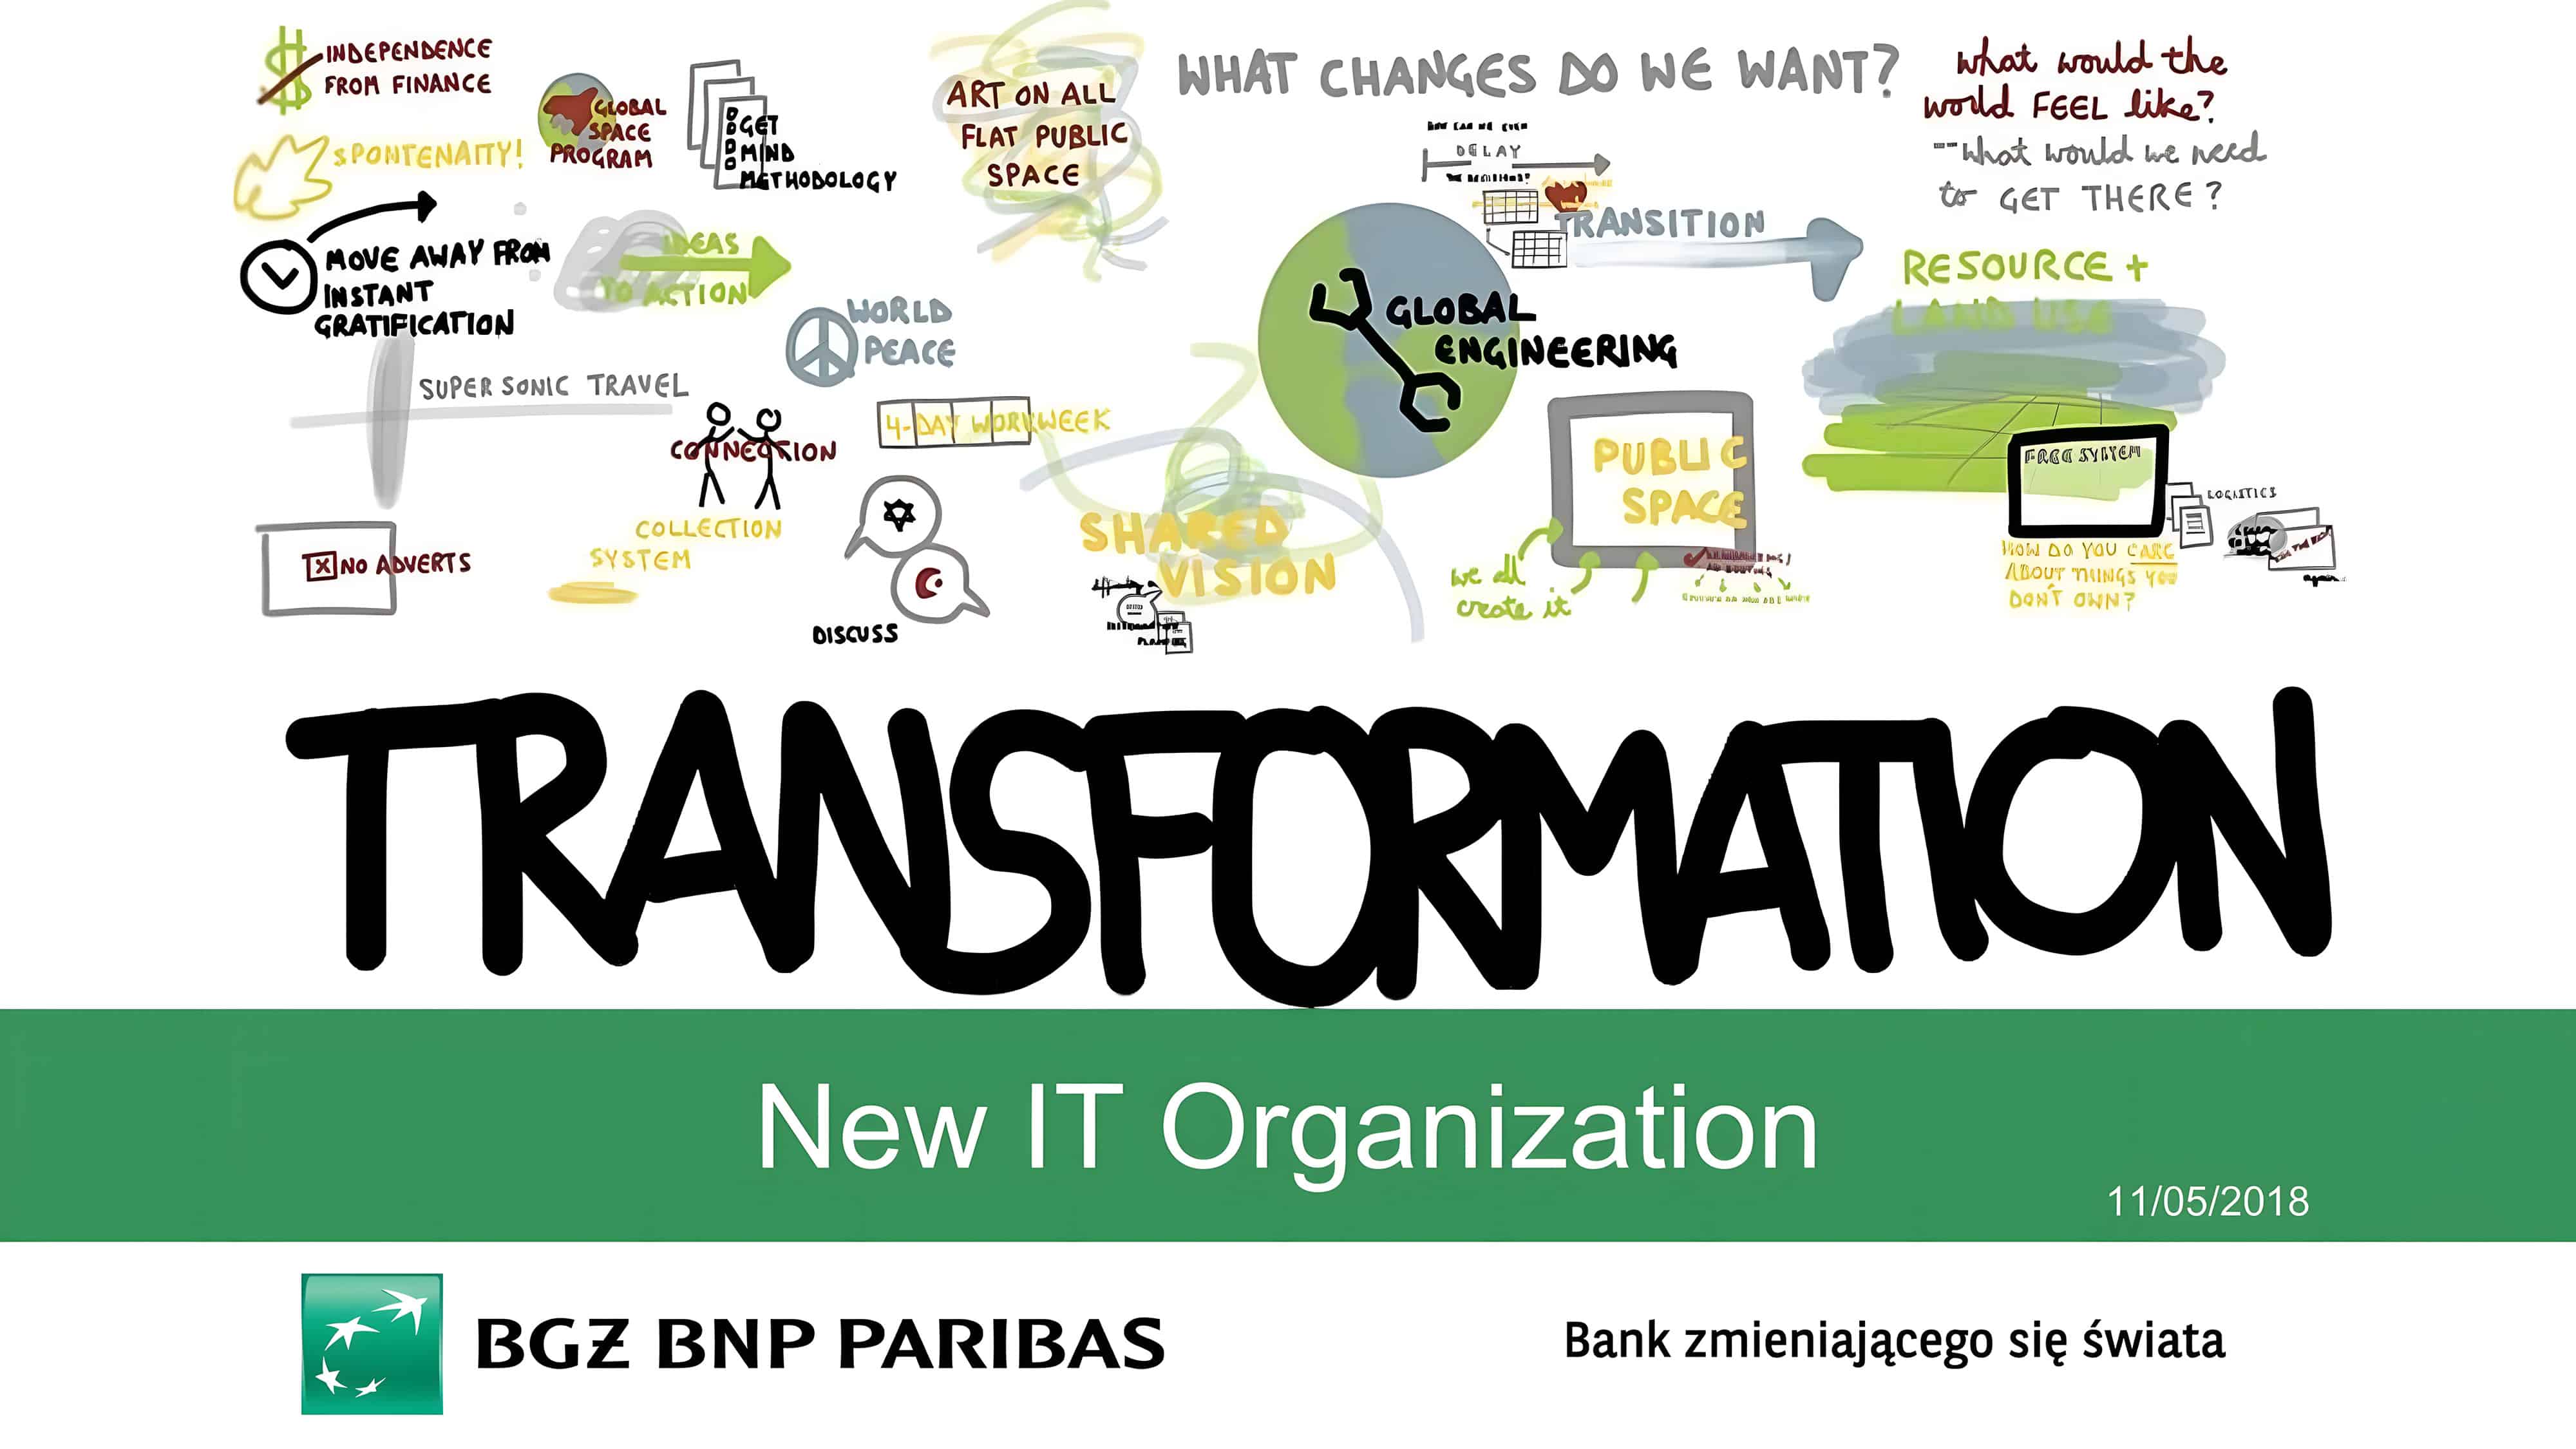 Bank BNP Paribas - The New IT Organization - 11.05.2018